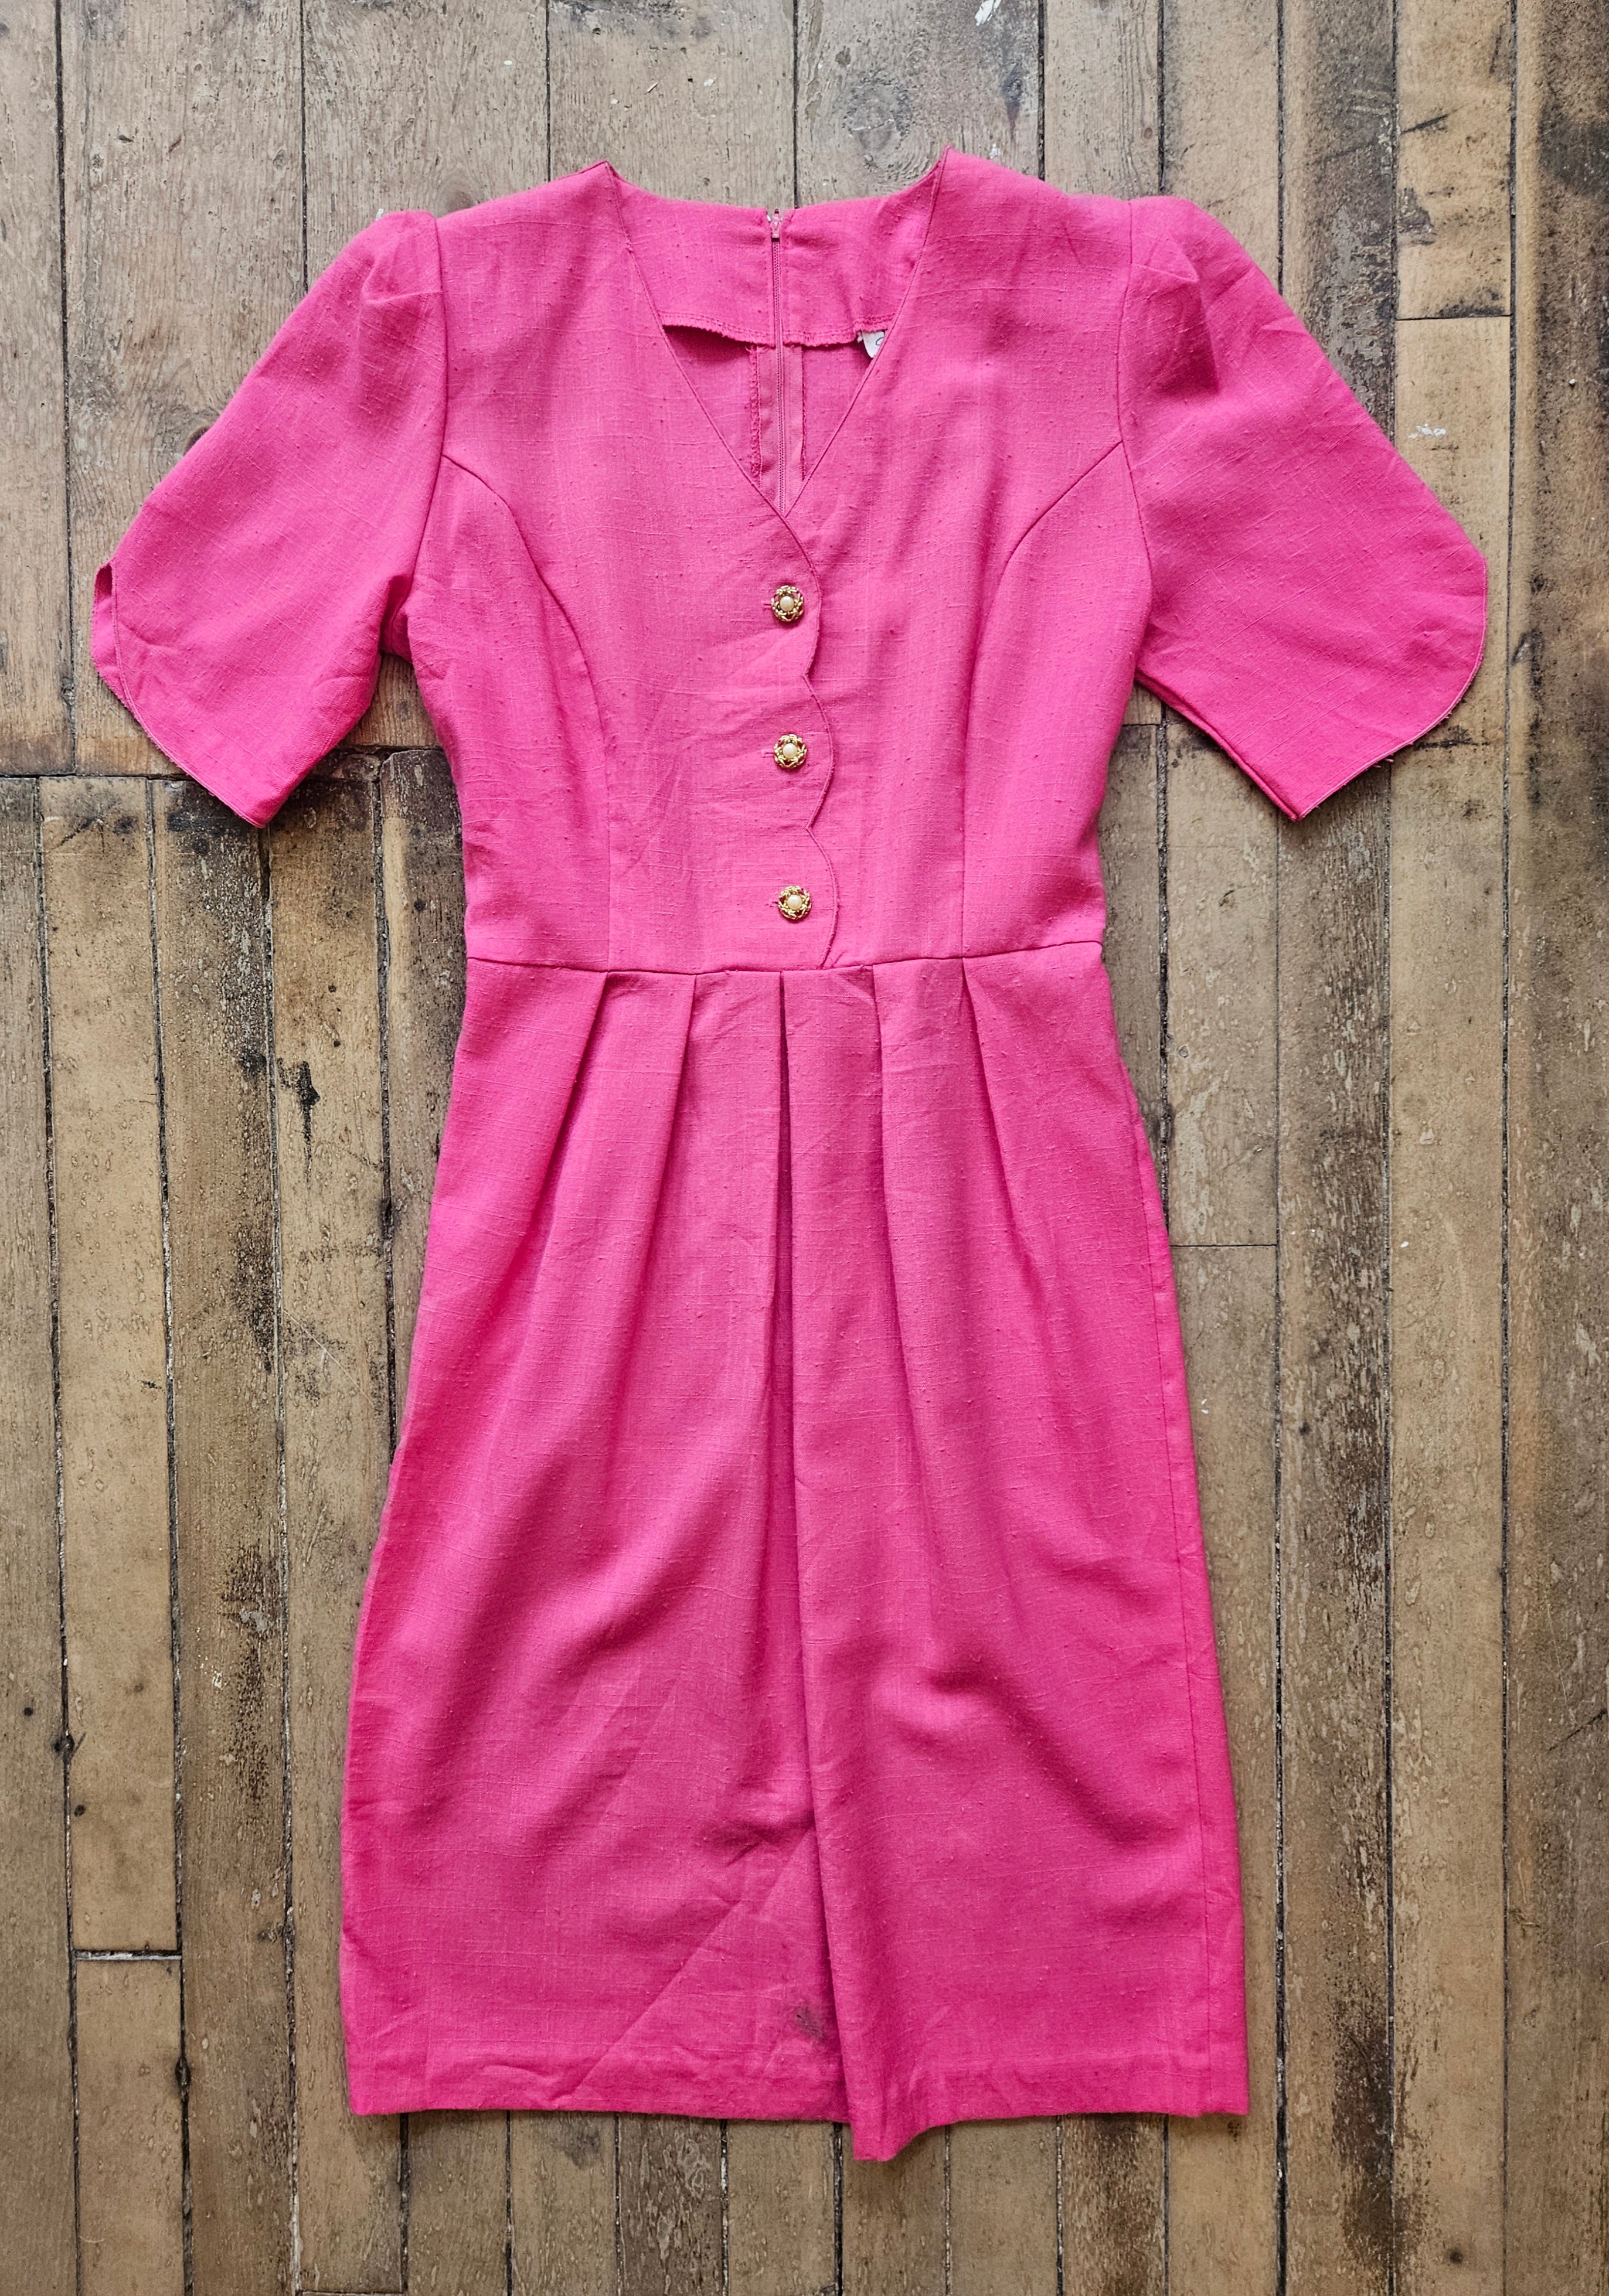 1980’s Bright Pink Dress